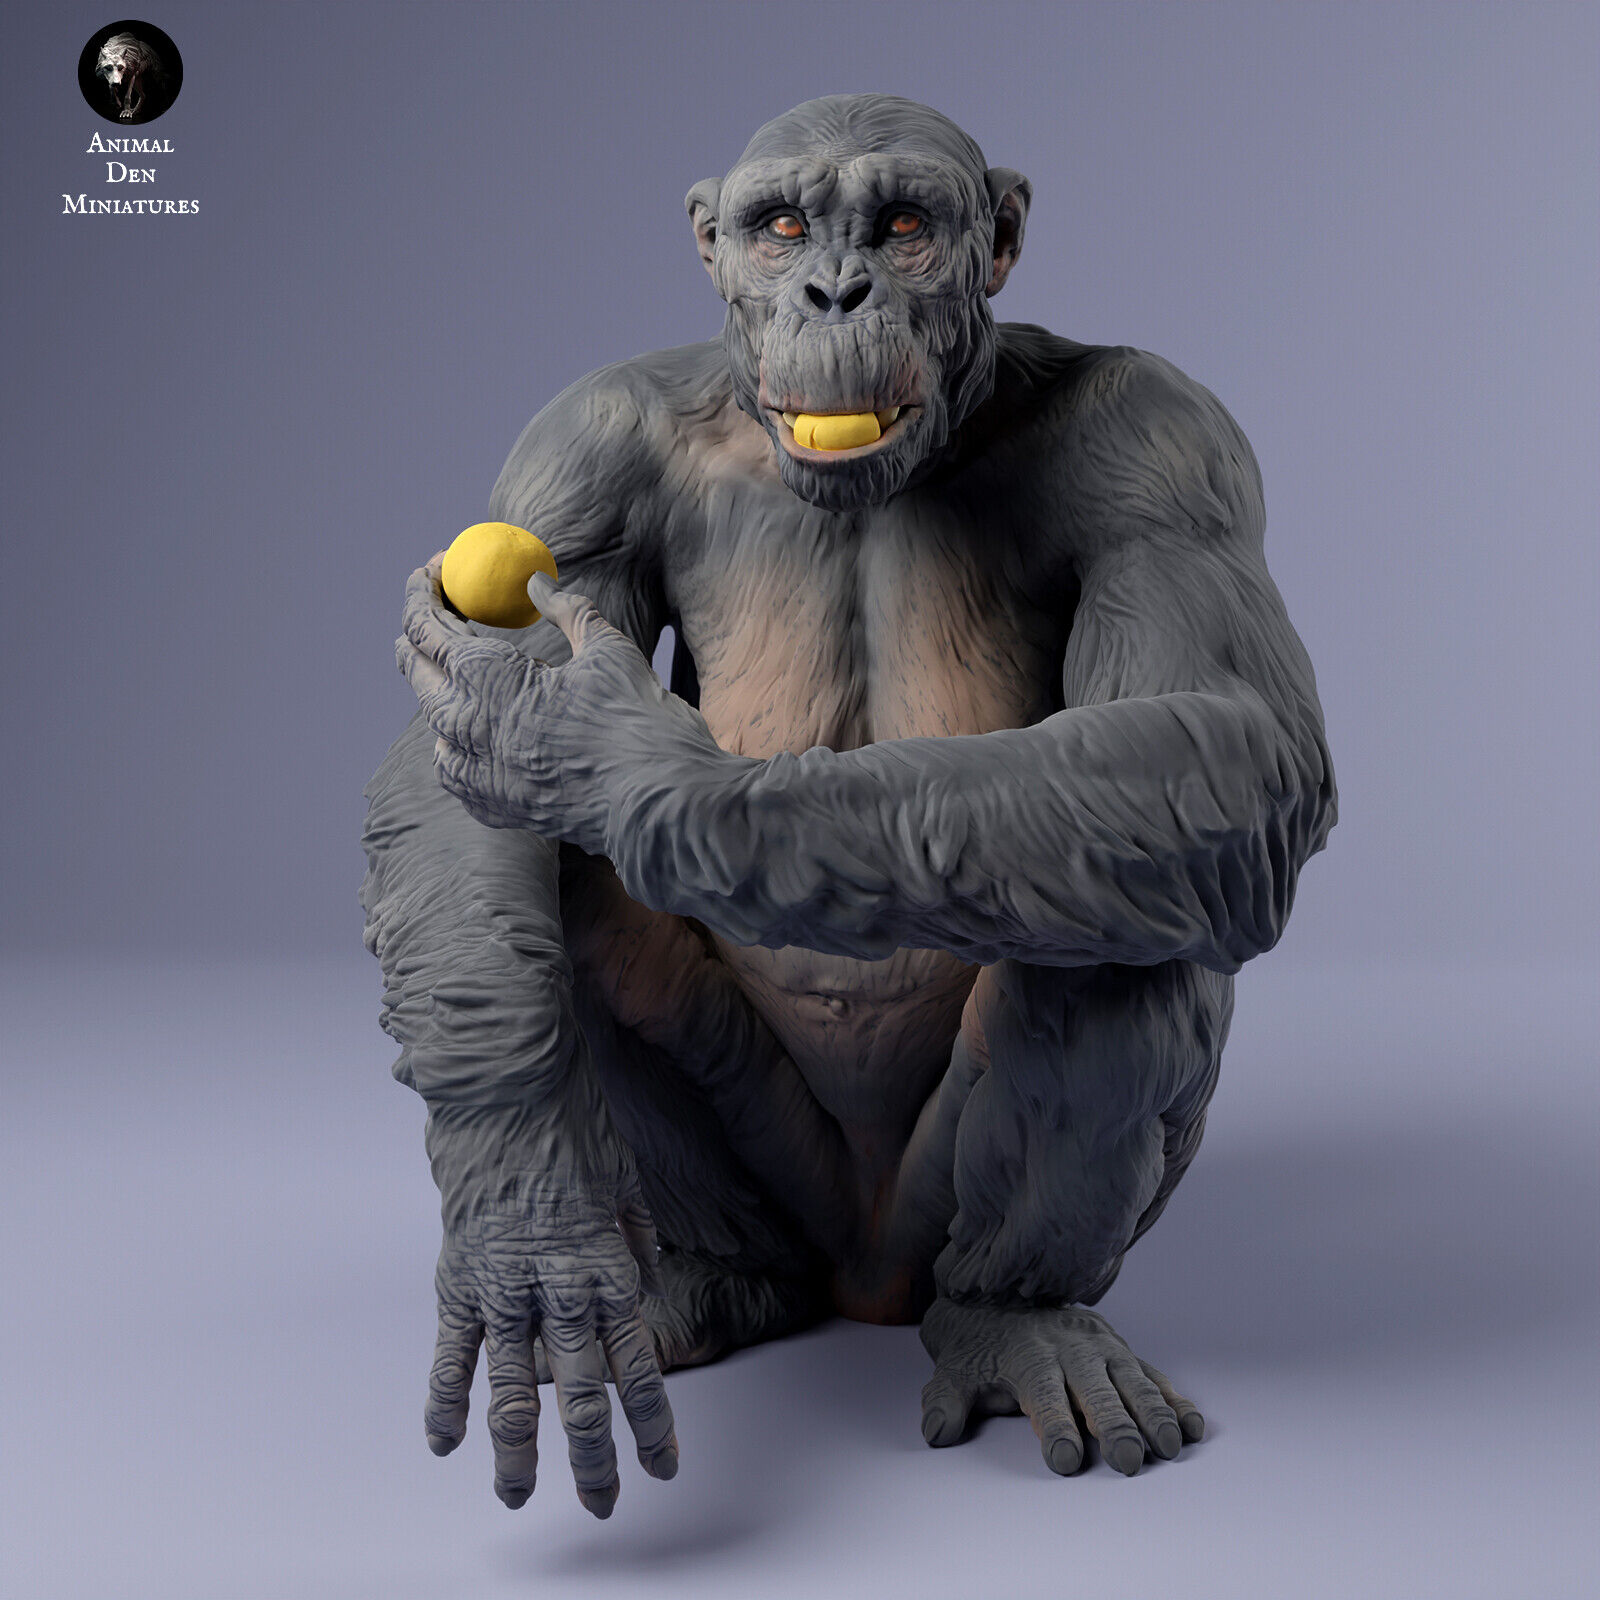 Breyer size artist resin companion animal figurine female chimpanzee